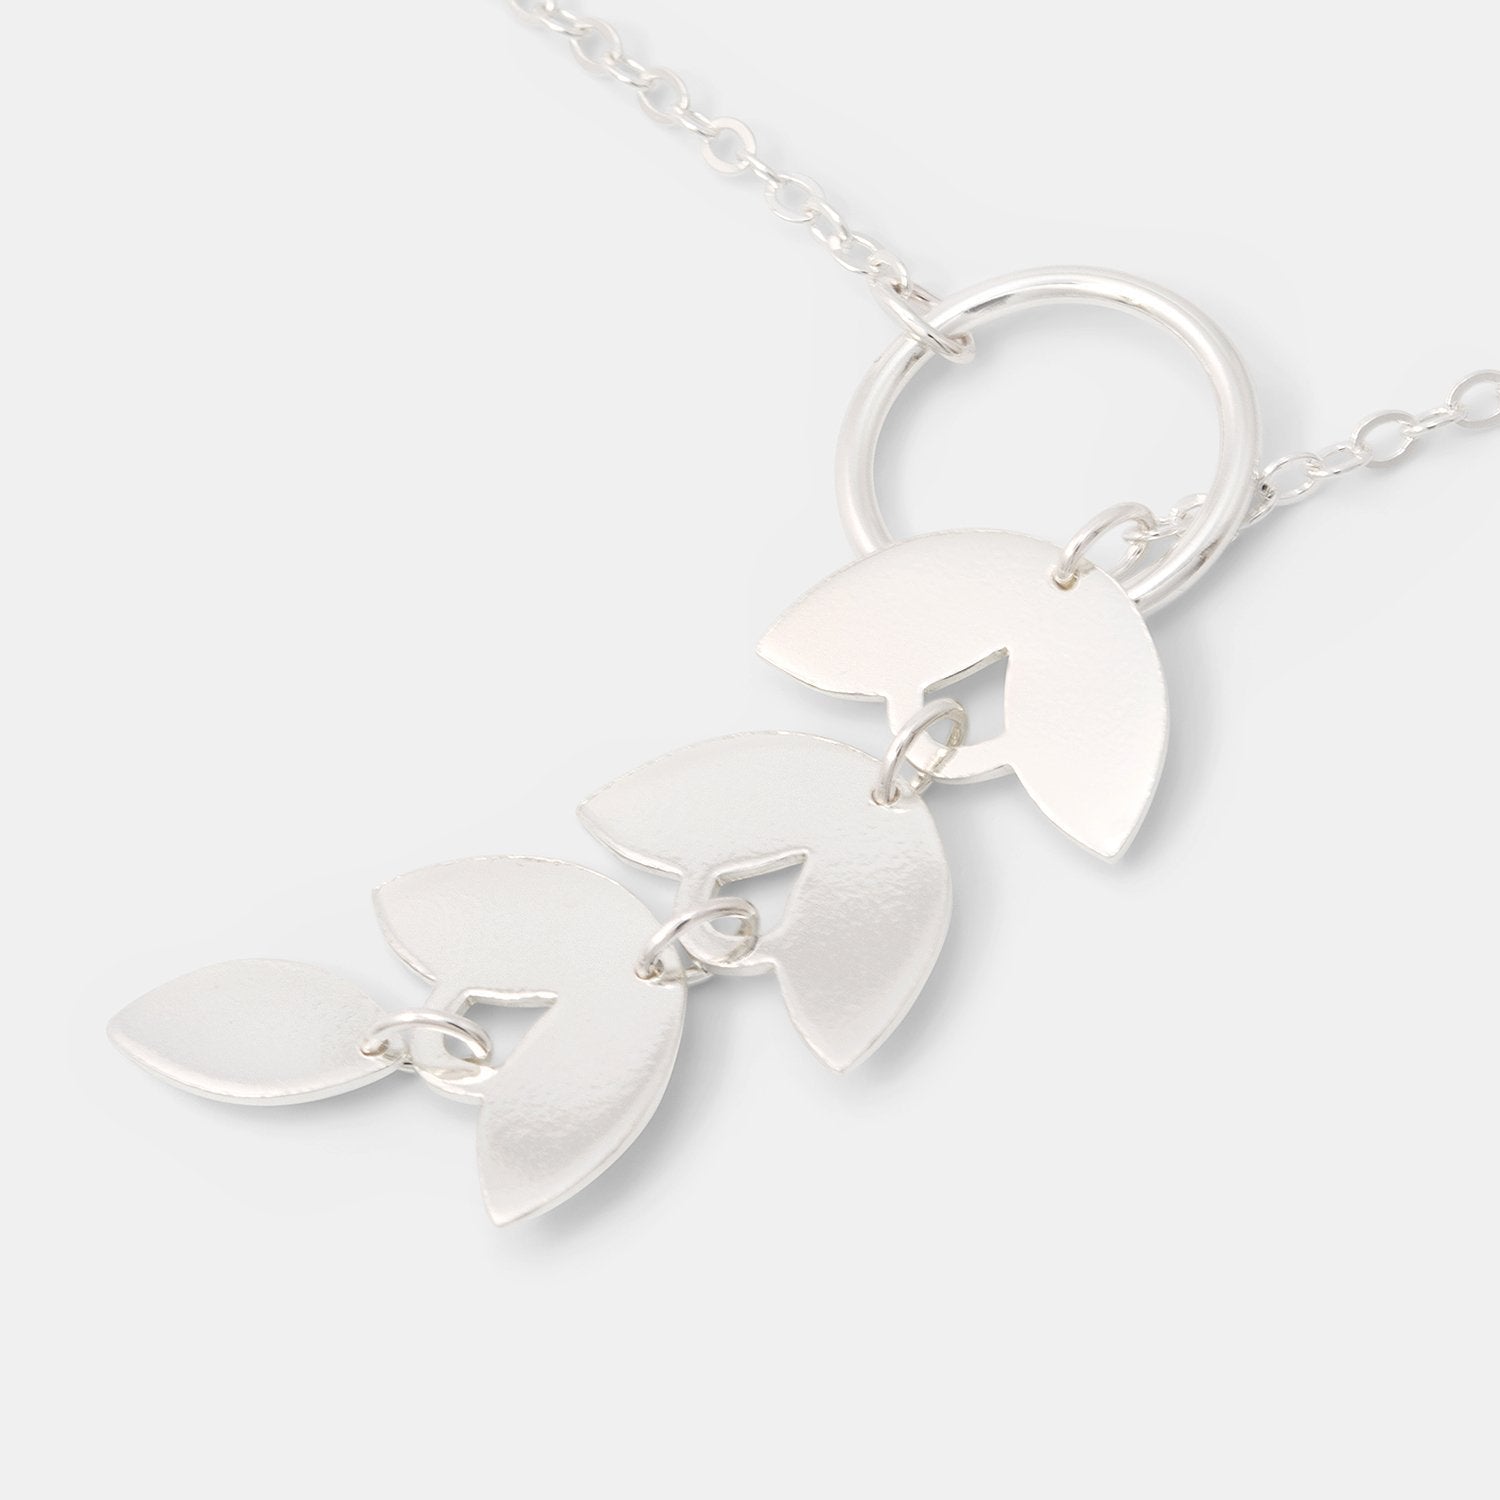 Leaves lariat necklace - Simone Walsh Jewellery Australia